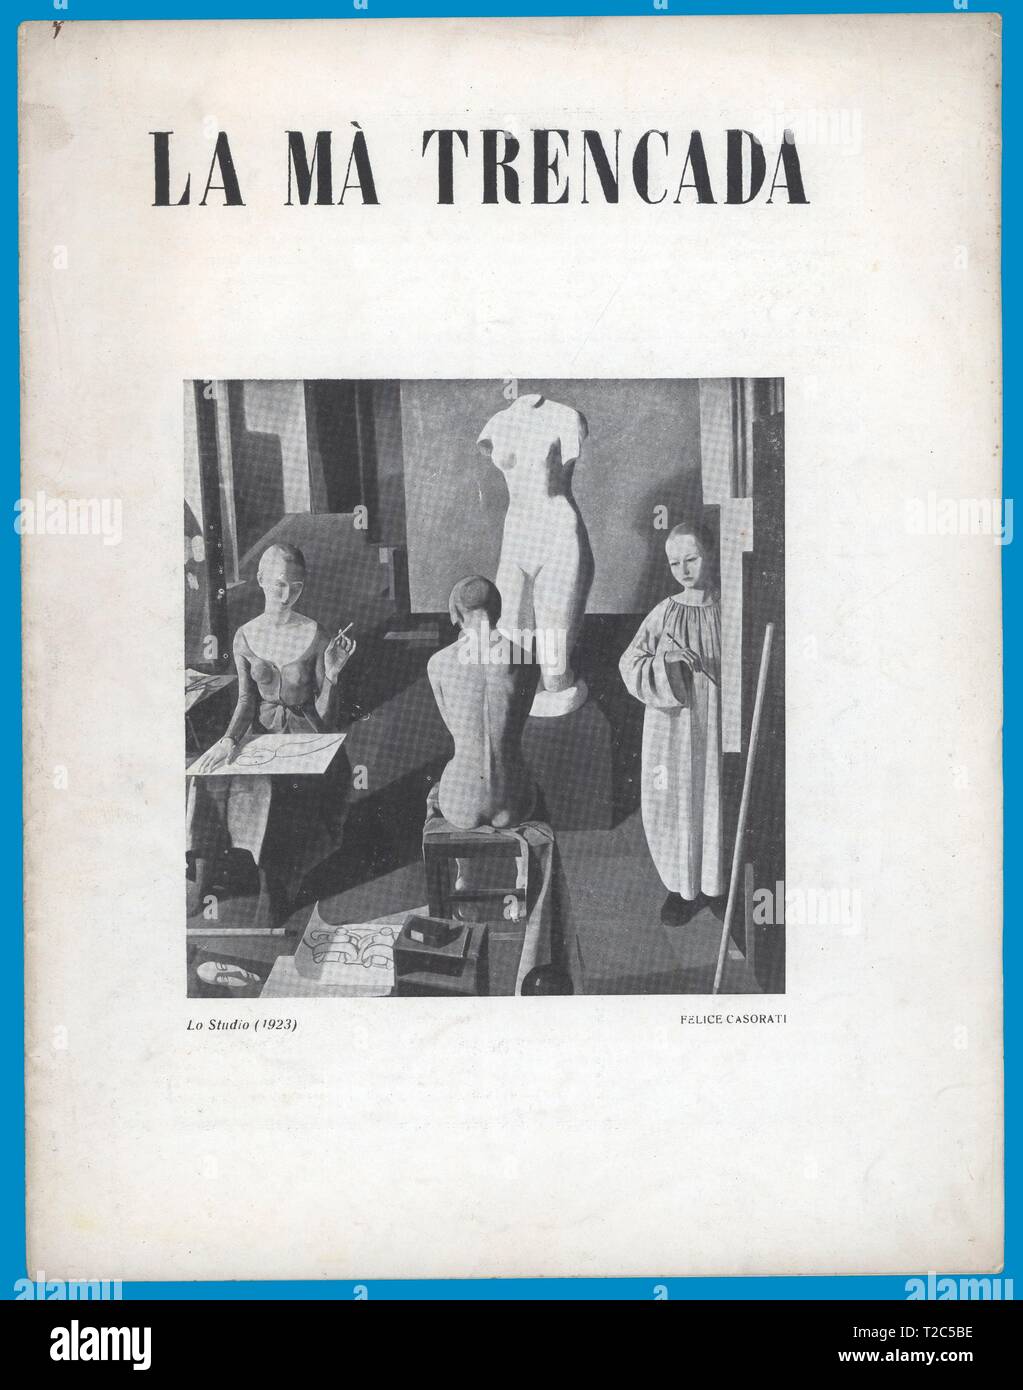 Portada de la revista de arte La Mà Trencada, editada en Barcelona, enero de 1925. Stock Photo